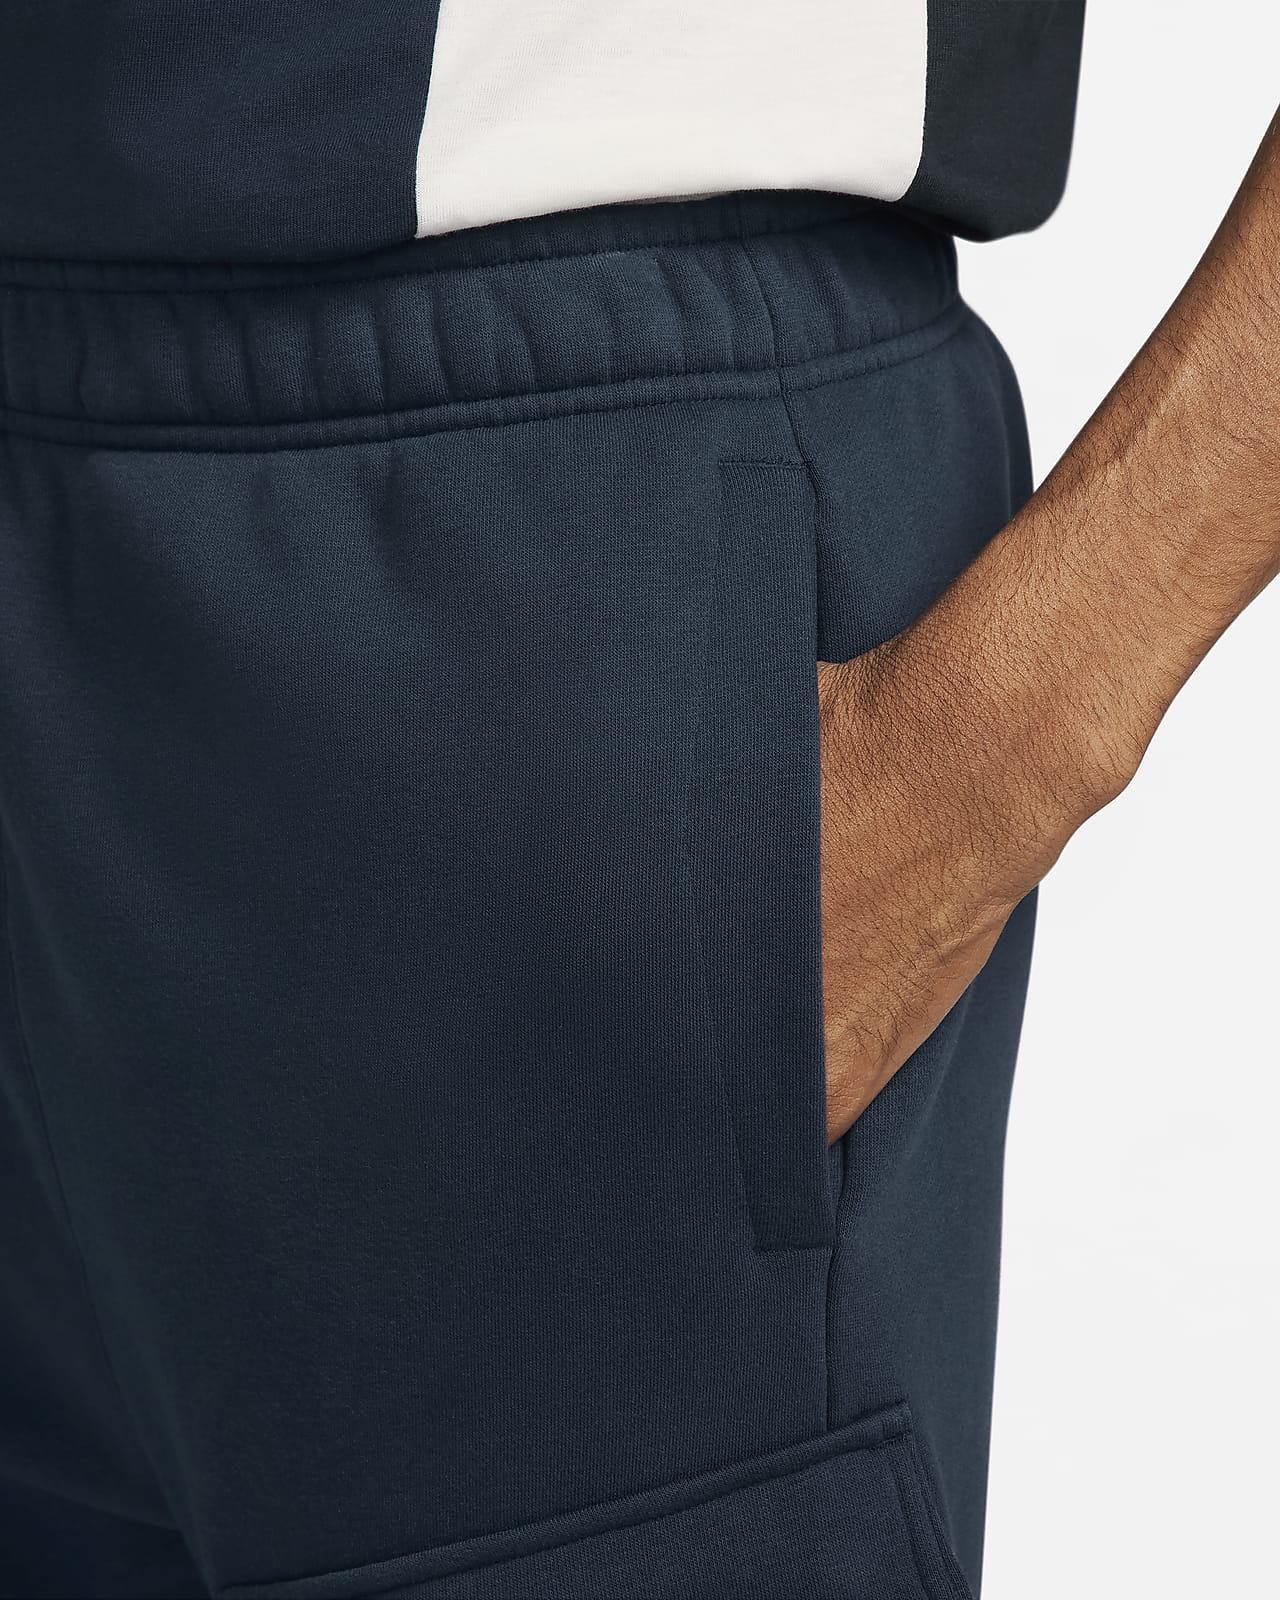 Nike Air Fleece Cargo Pants Cool Grey / Anthracite